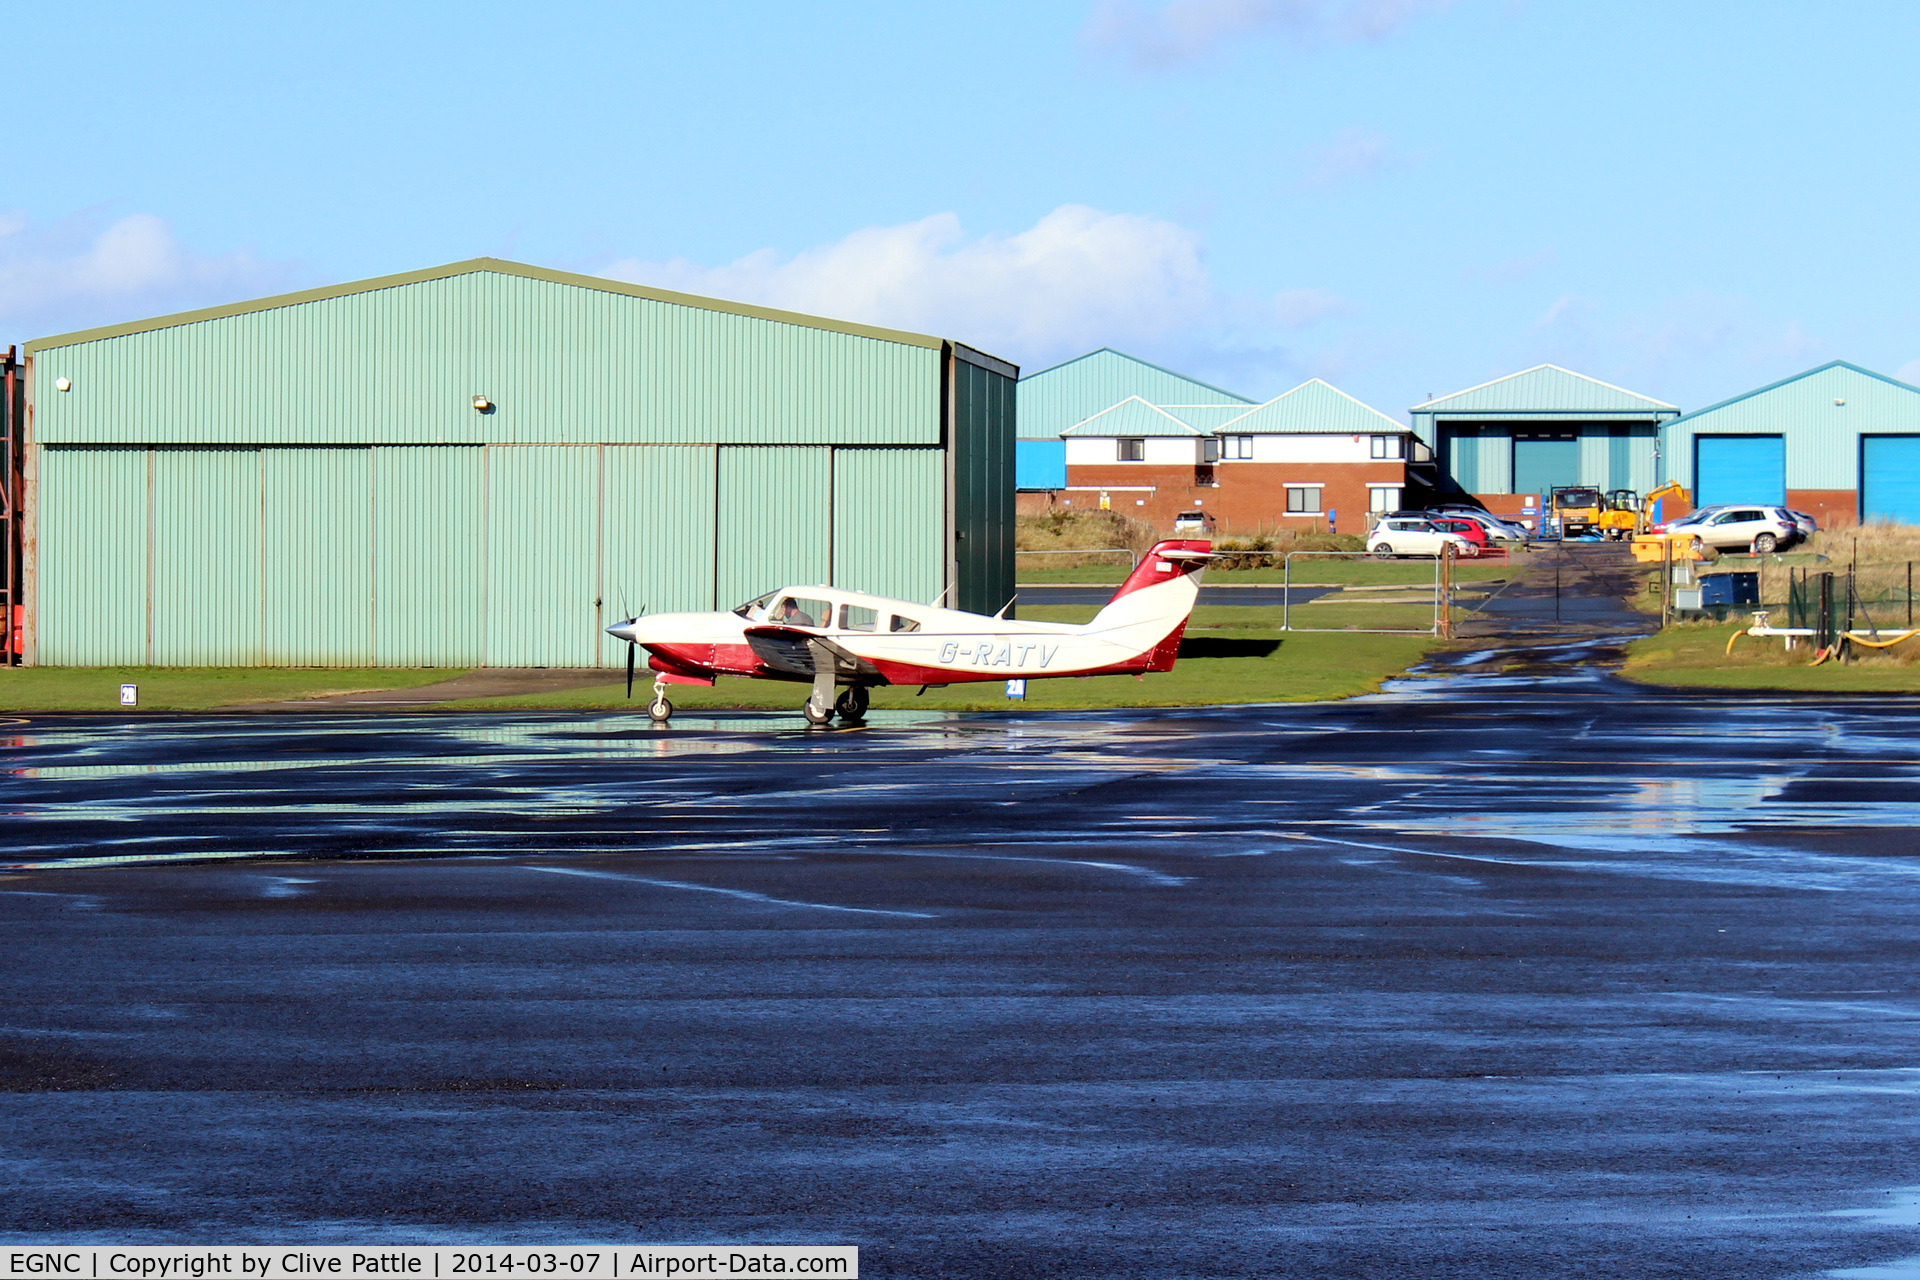 Carlisle Airport, Carlisle, England United Kingdom (EGNC) - Apron view of Carlisle airport